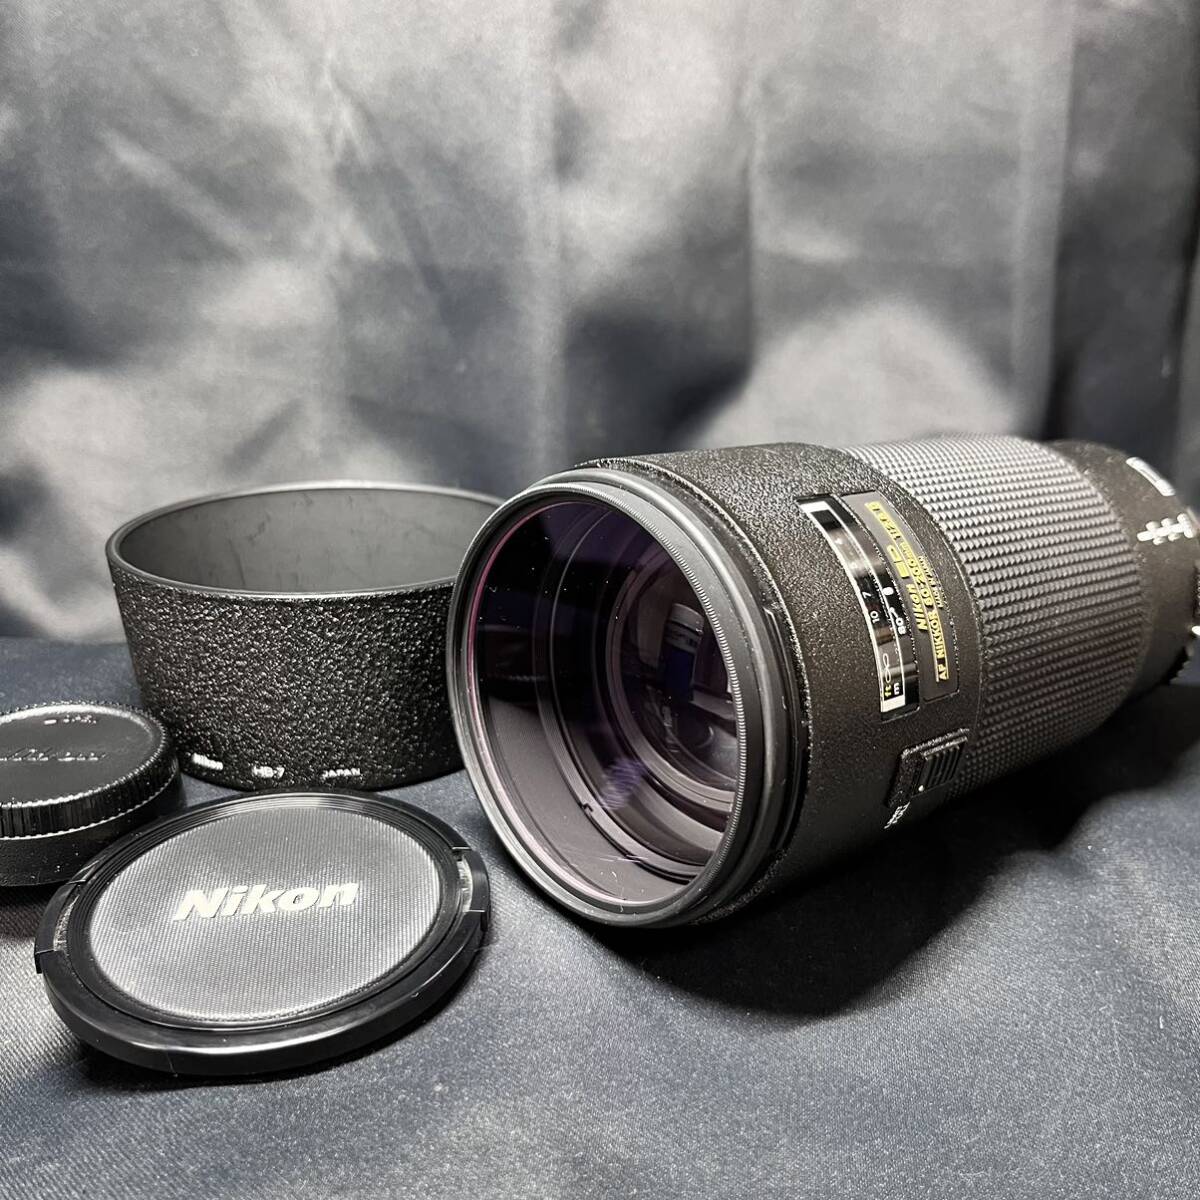 Nikon ニコン ED AF NIKKOR 80-200mm 1:2.8 D カメラレンズ/Nikon HB-7 レンズフード レンズキャップ付き 美品の画像1